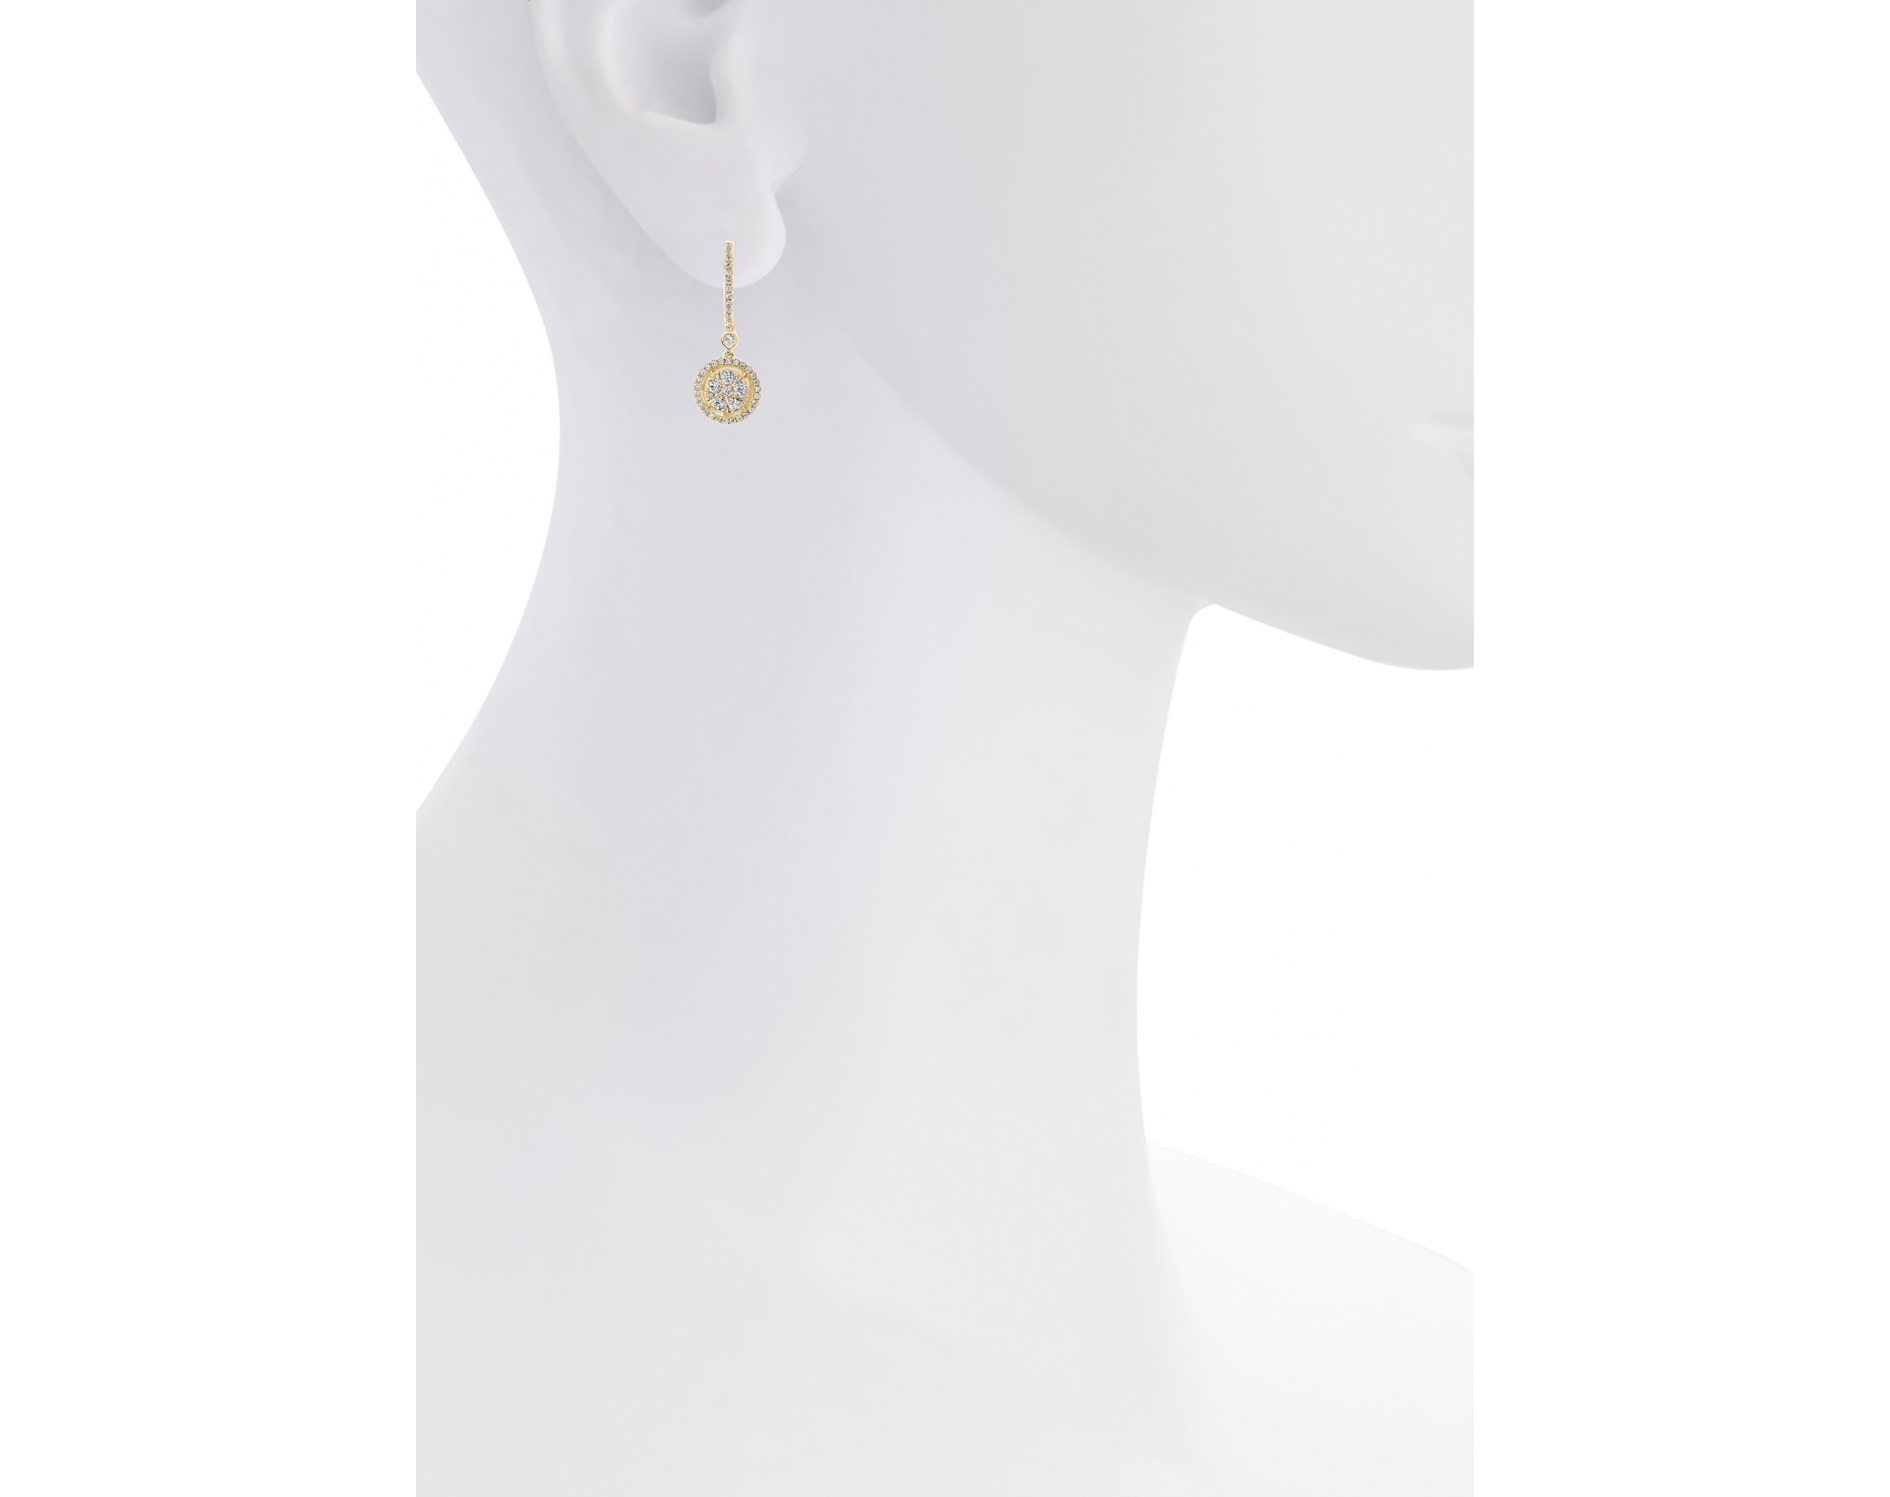 18k yellow gold halo illusion set diamond earrings with upstones